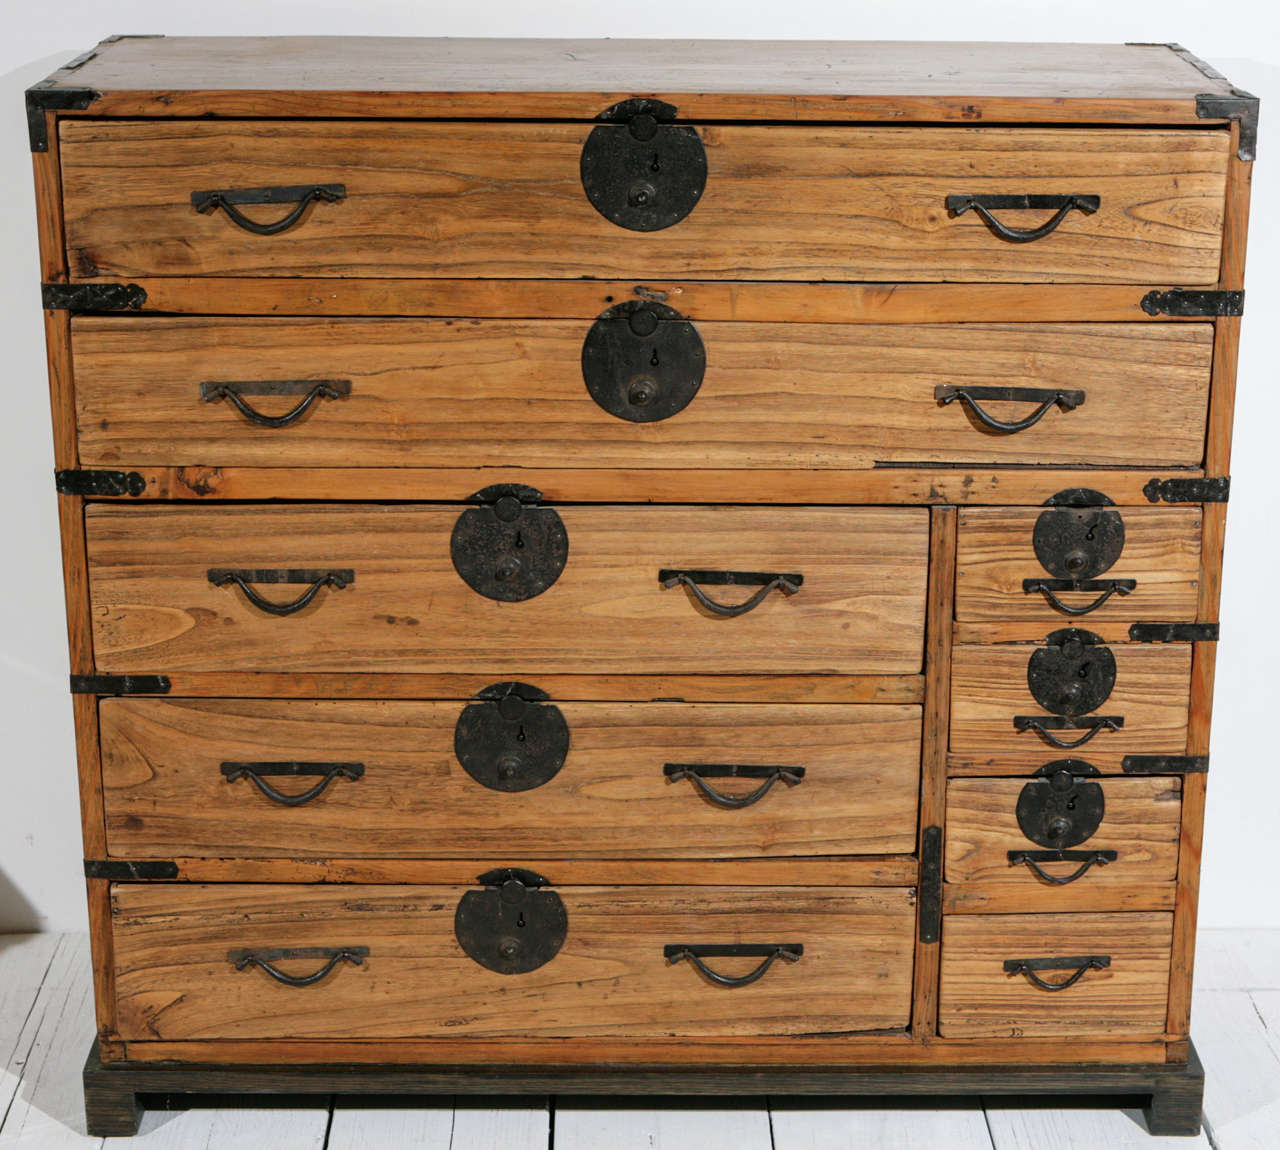 Japanese Tansu chest of nine drawers. Dry kiri wood finish. Original iron fittings and hardware.